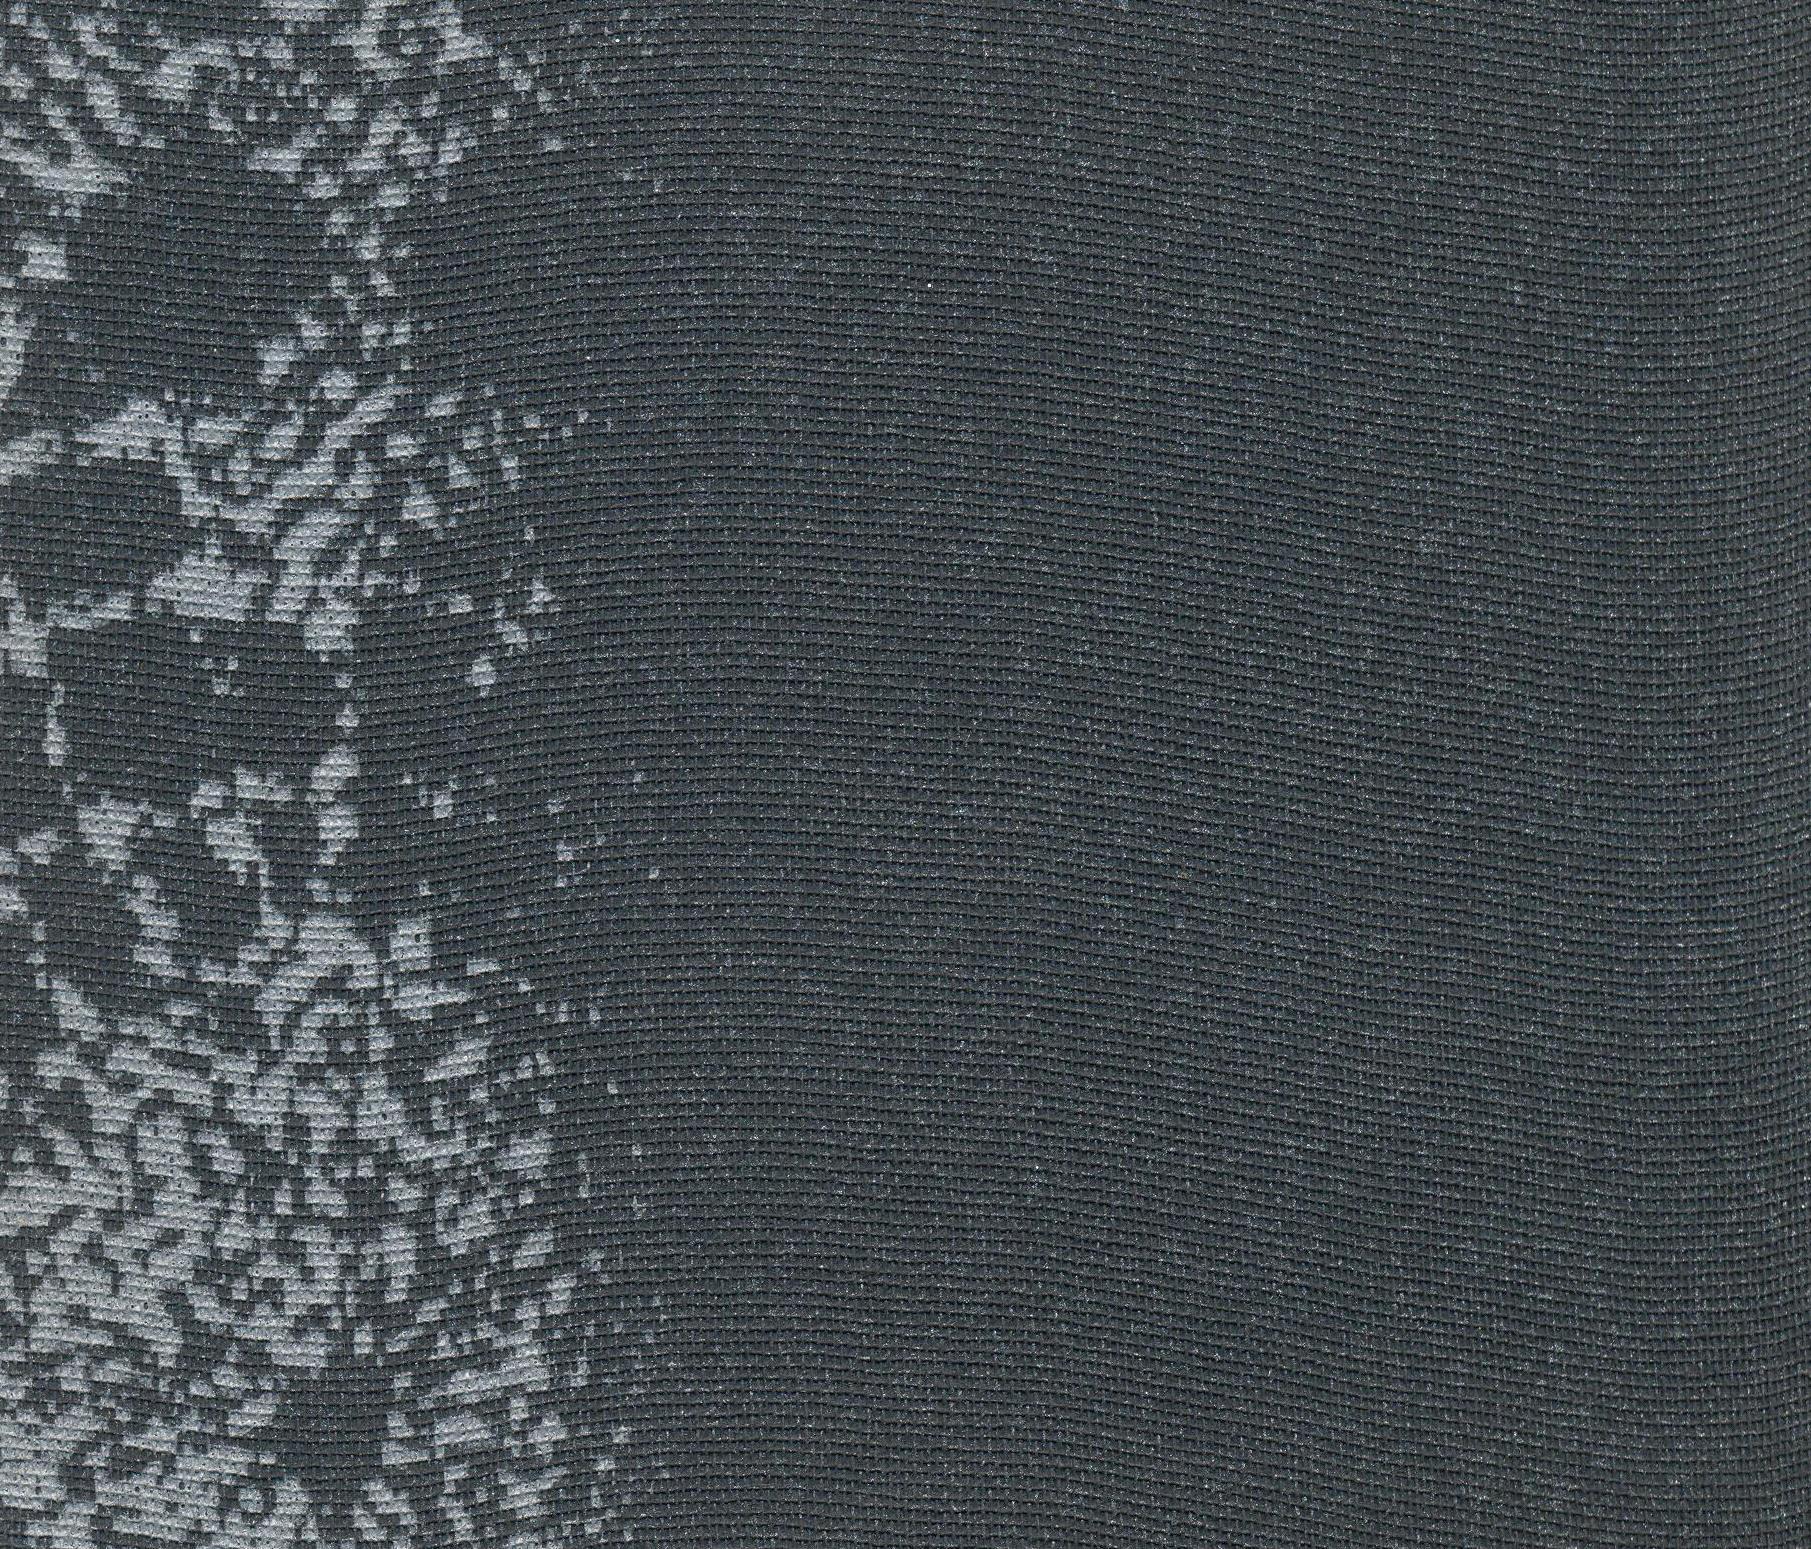 CROCHET coverings / wallpaper from Agena